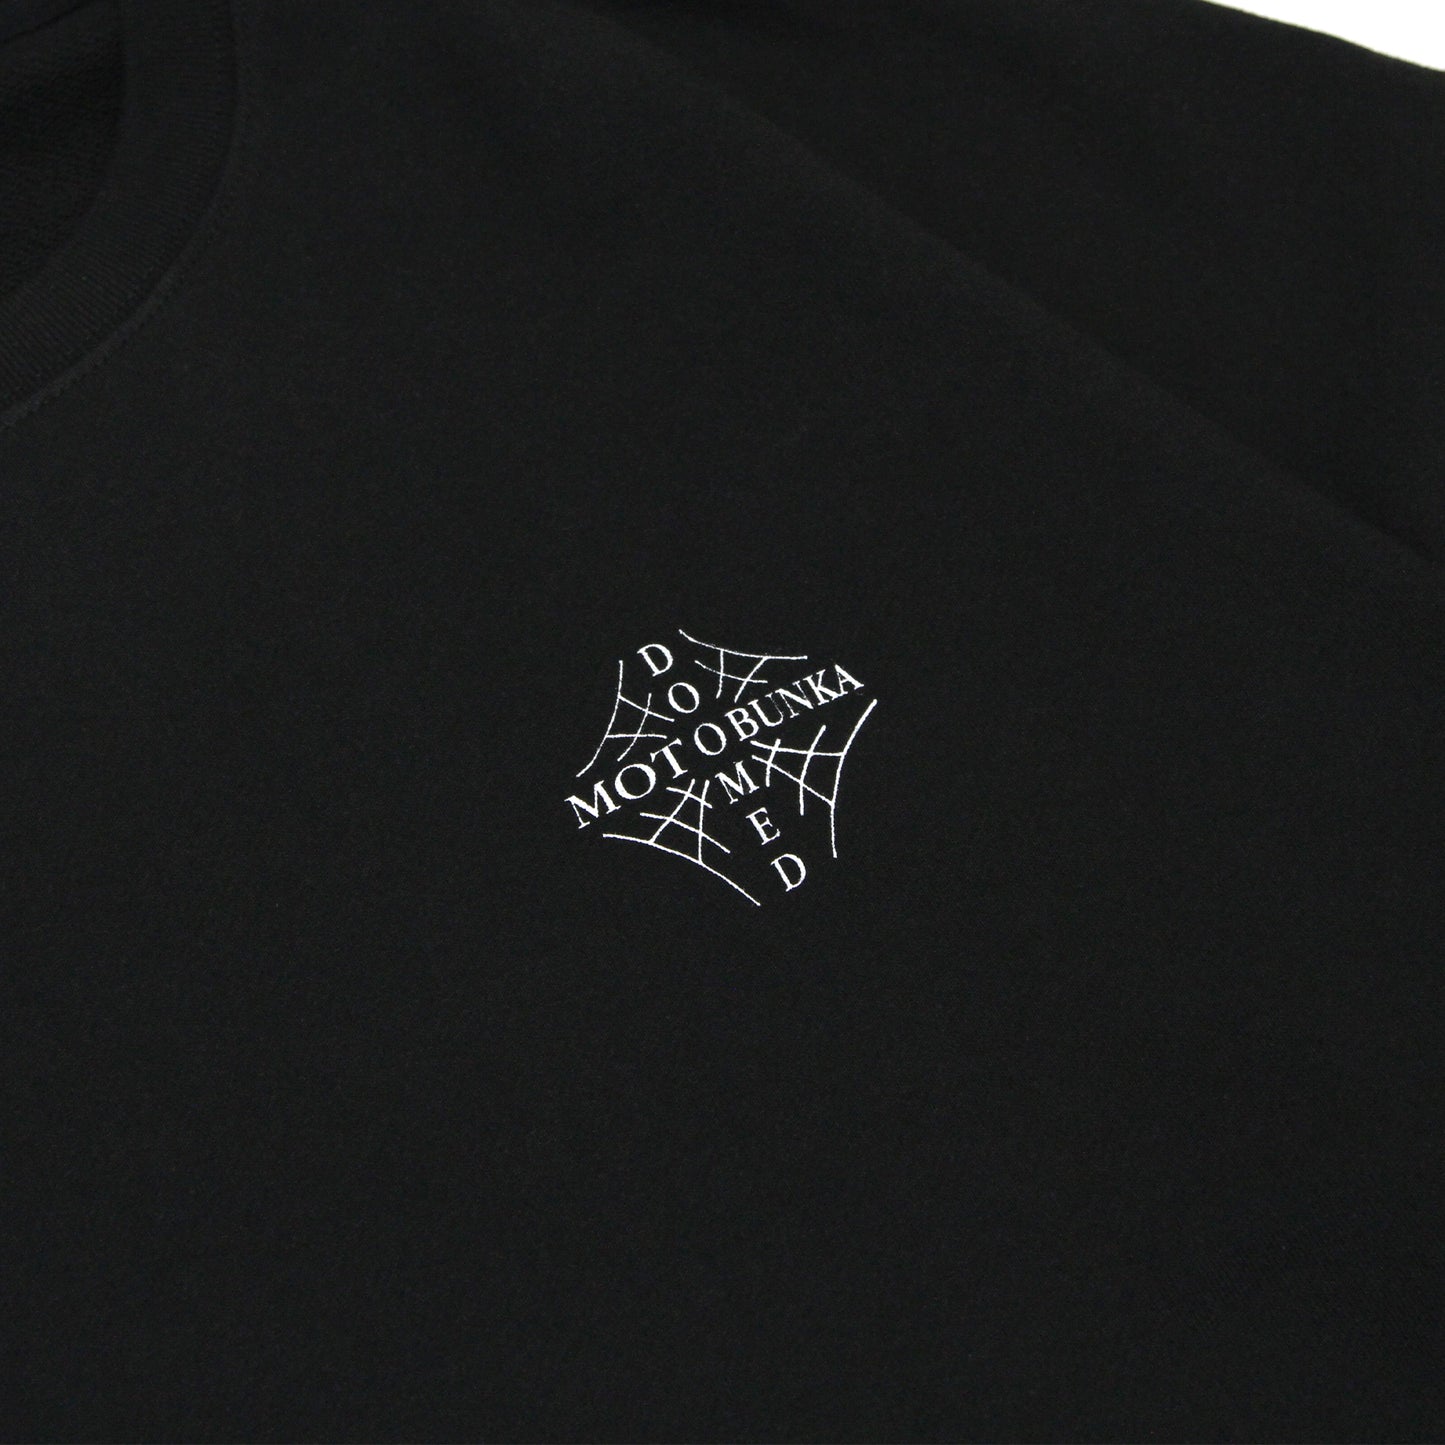 MOTO-BUNKA X DOOMED - Web Cross Sweatshirt/Black